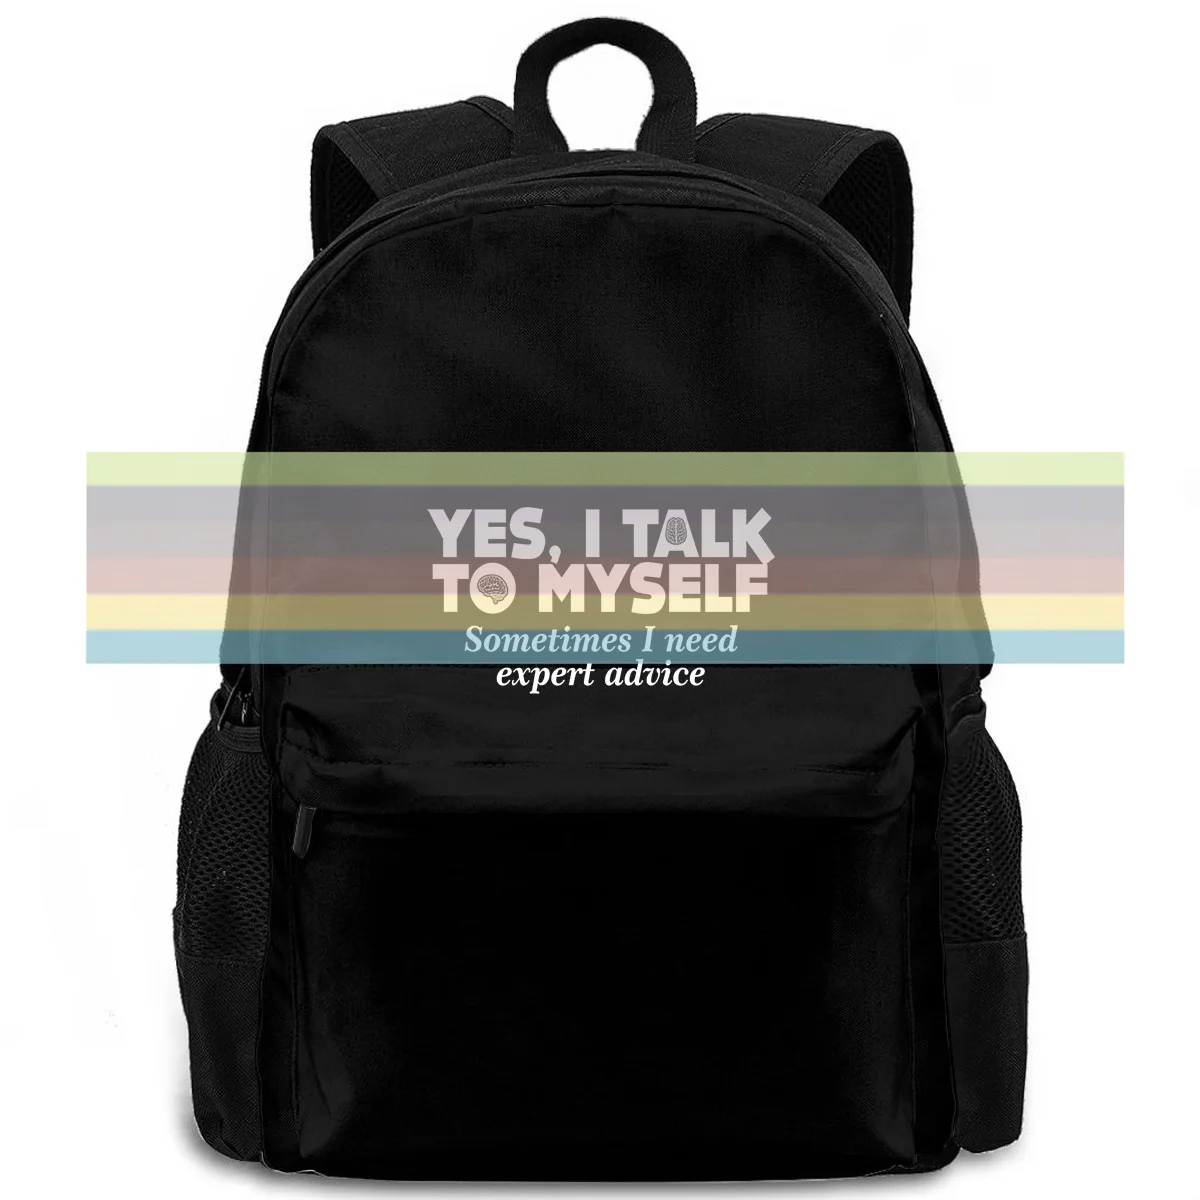 

Yes I Talk To Myself Sometimes I Need Expert Advice - joke sarcasm slogan women men backpack laptop travel school adult